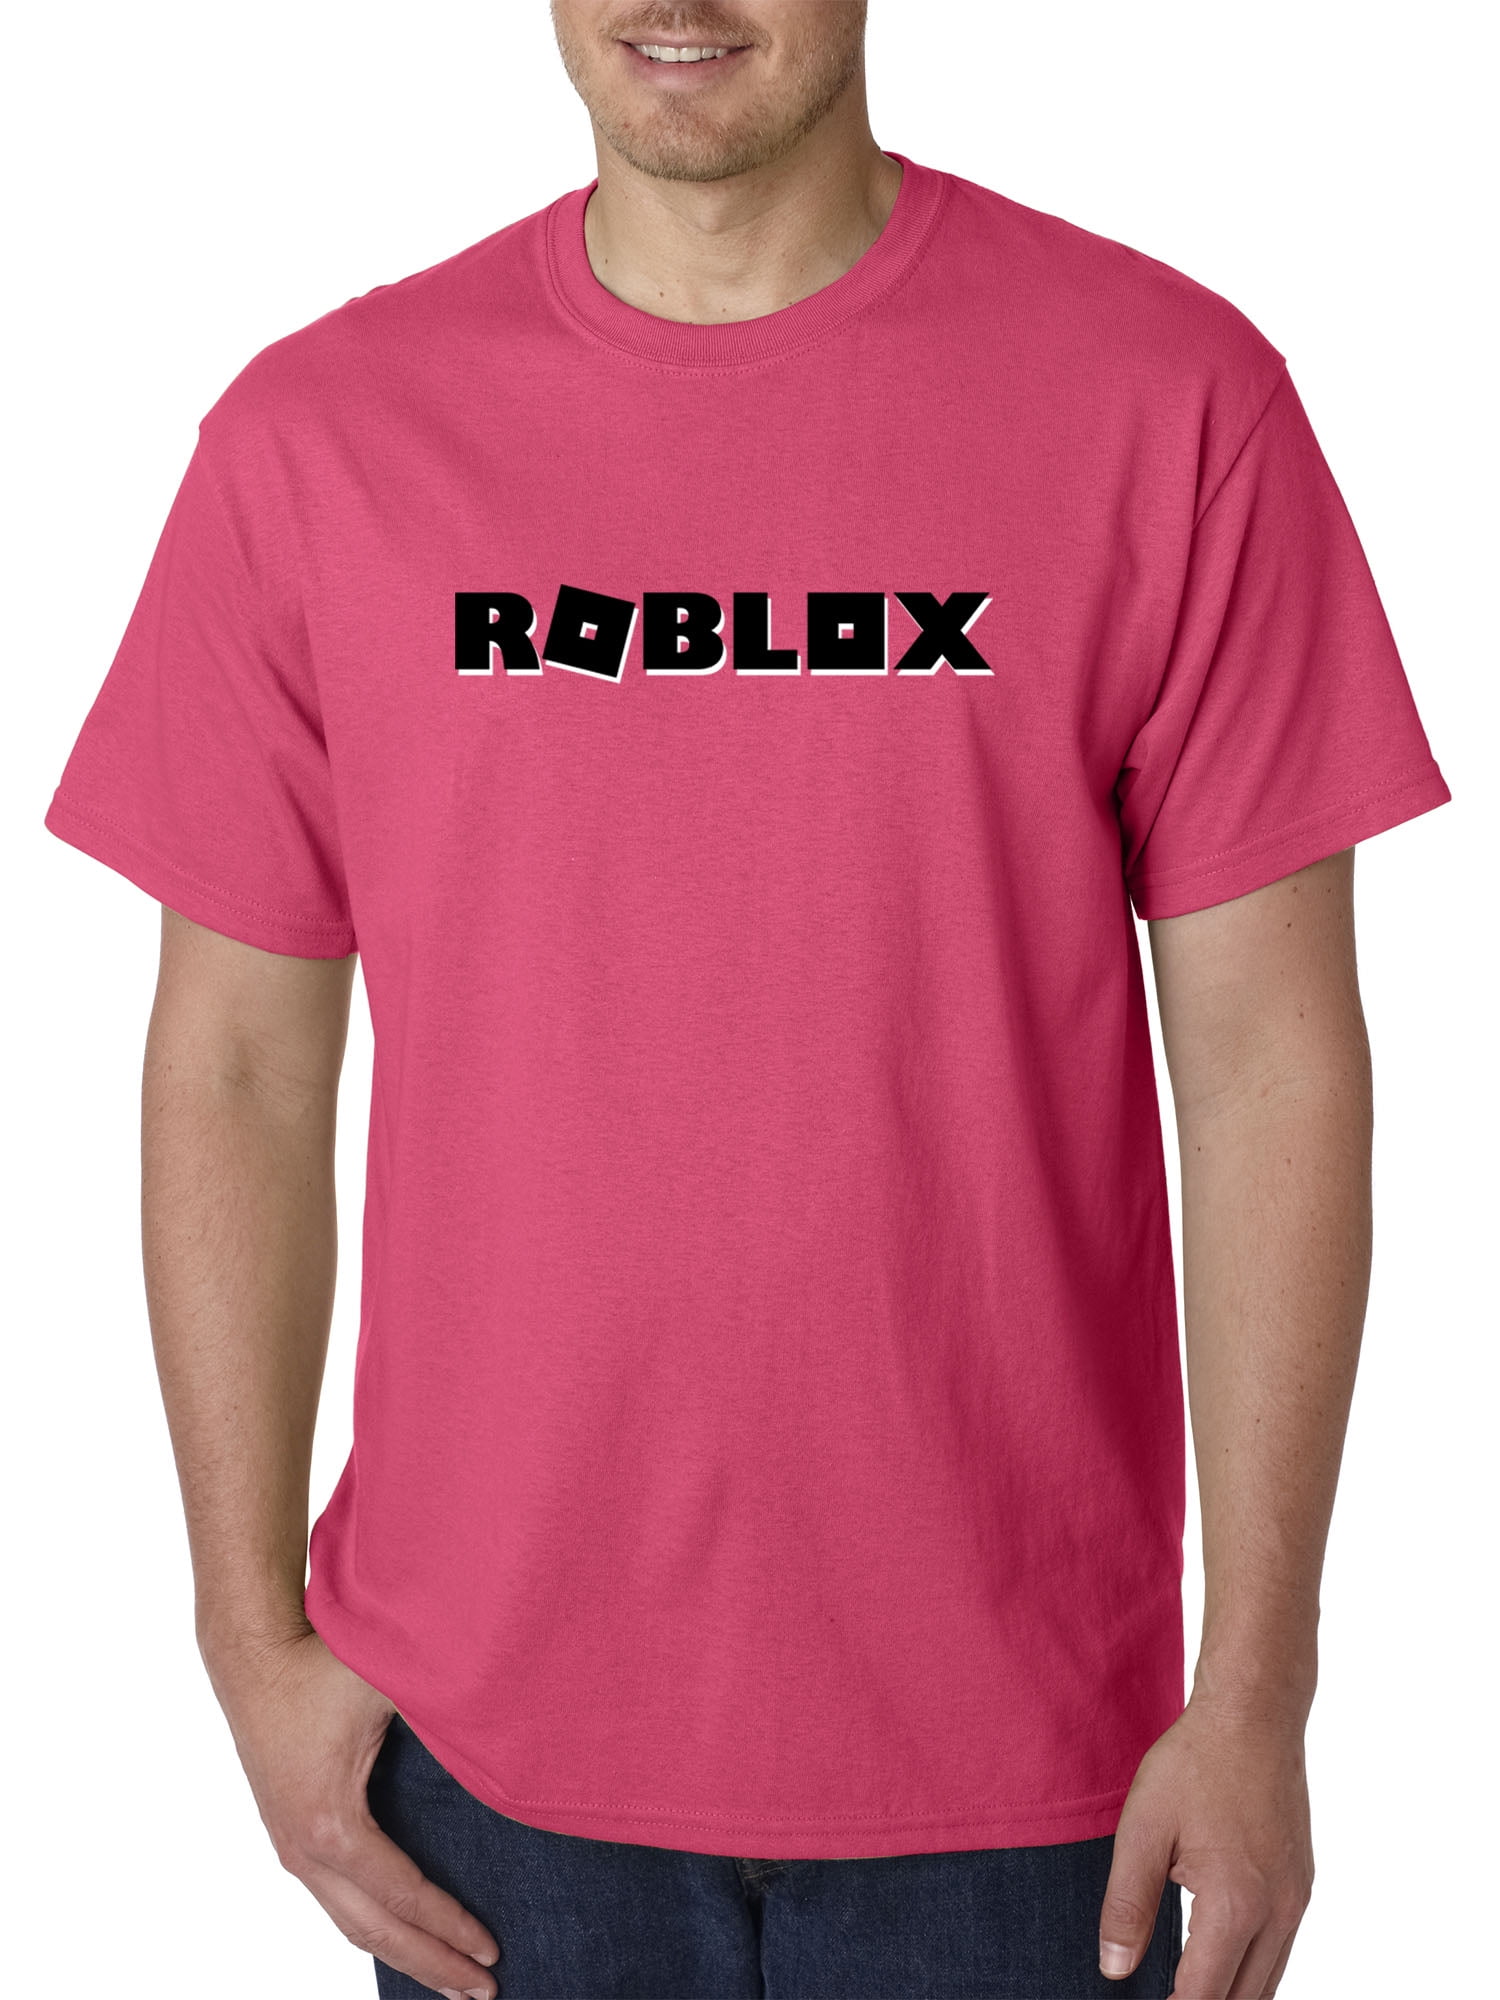 Create Shirts Roblox Fertilizer Society Of Tanzania - roblox kanye west pants